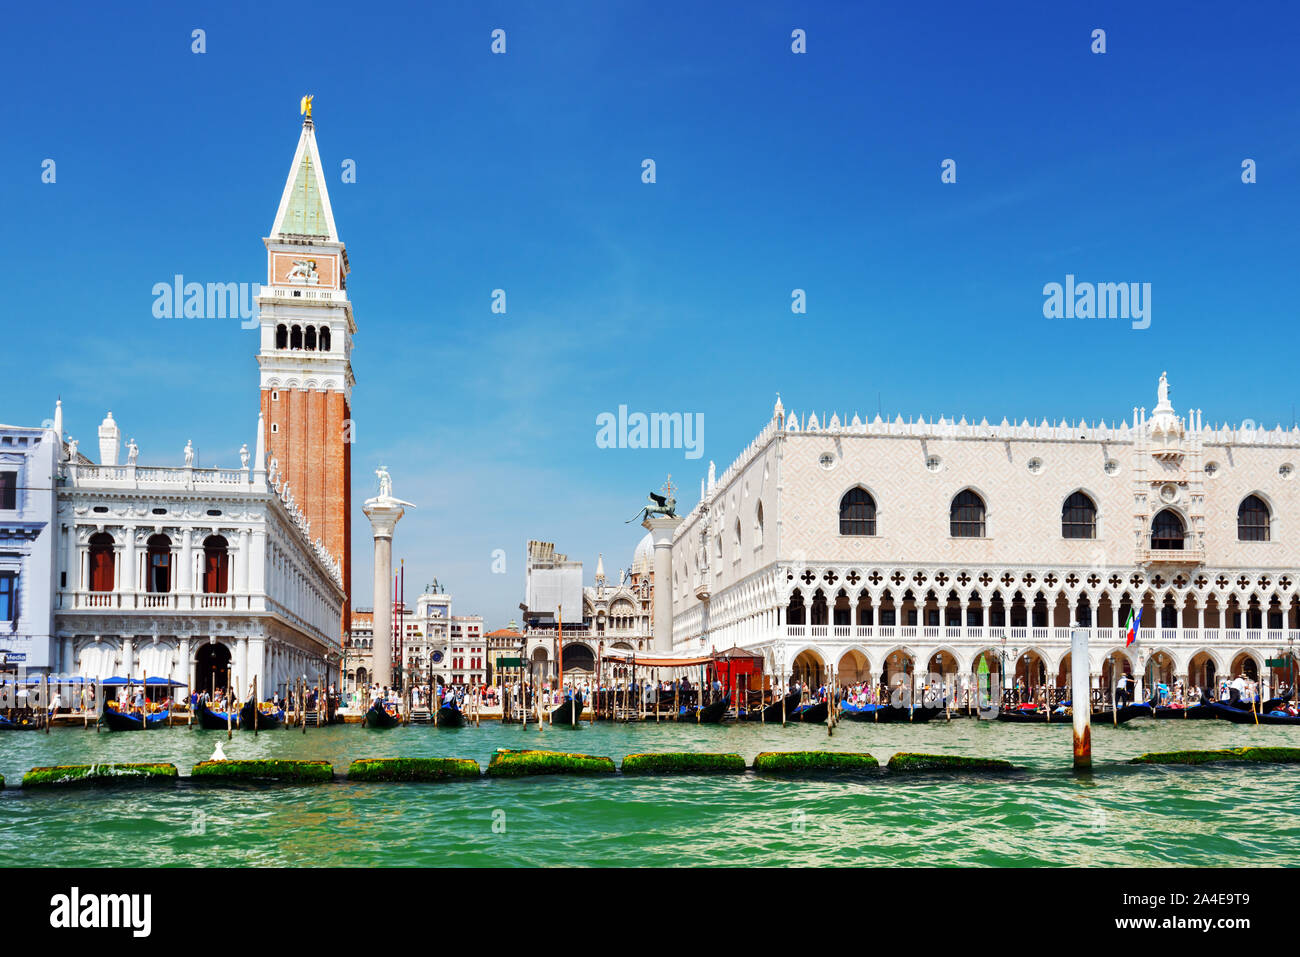 Venedig, Italien - 8. August 2014: Piazza San Marco Blick vom Boot auf den Canal Grande Stockfoto